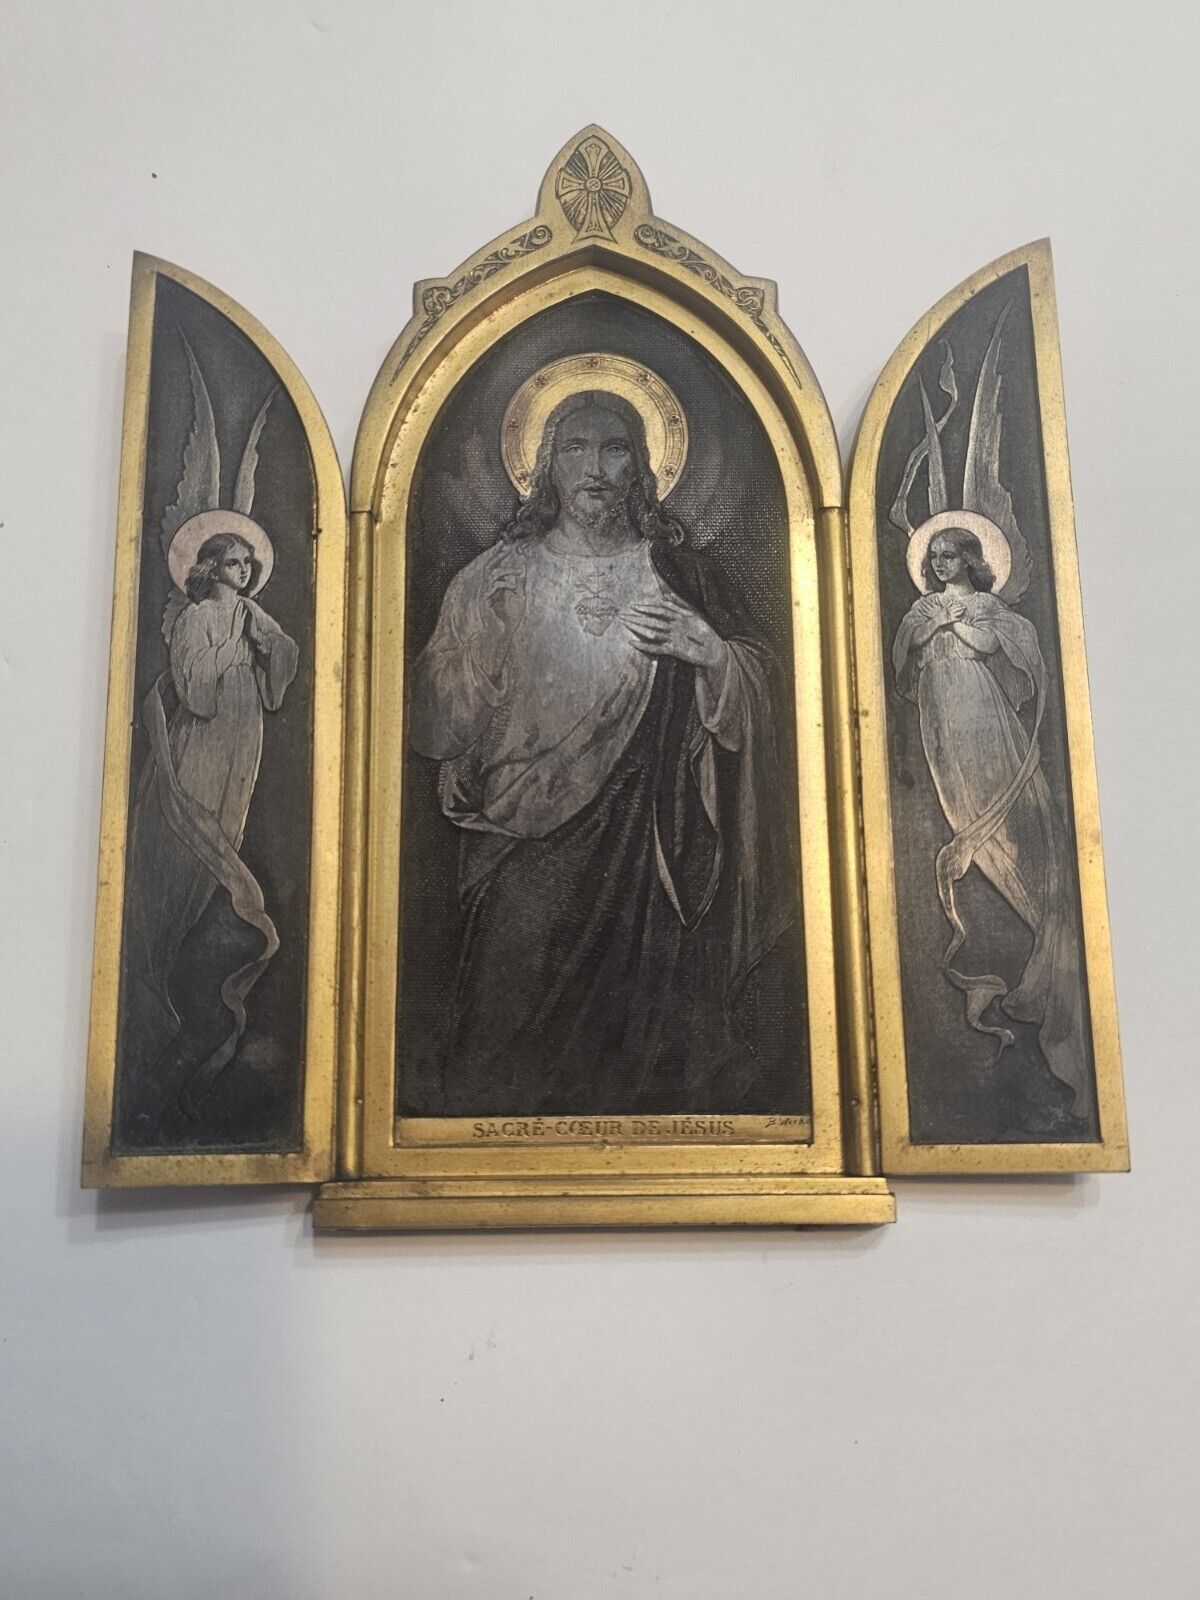 Antique Metal Triptych Icon Jesus Bernard Wicker Engraver France Late 1800s 1900